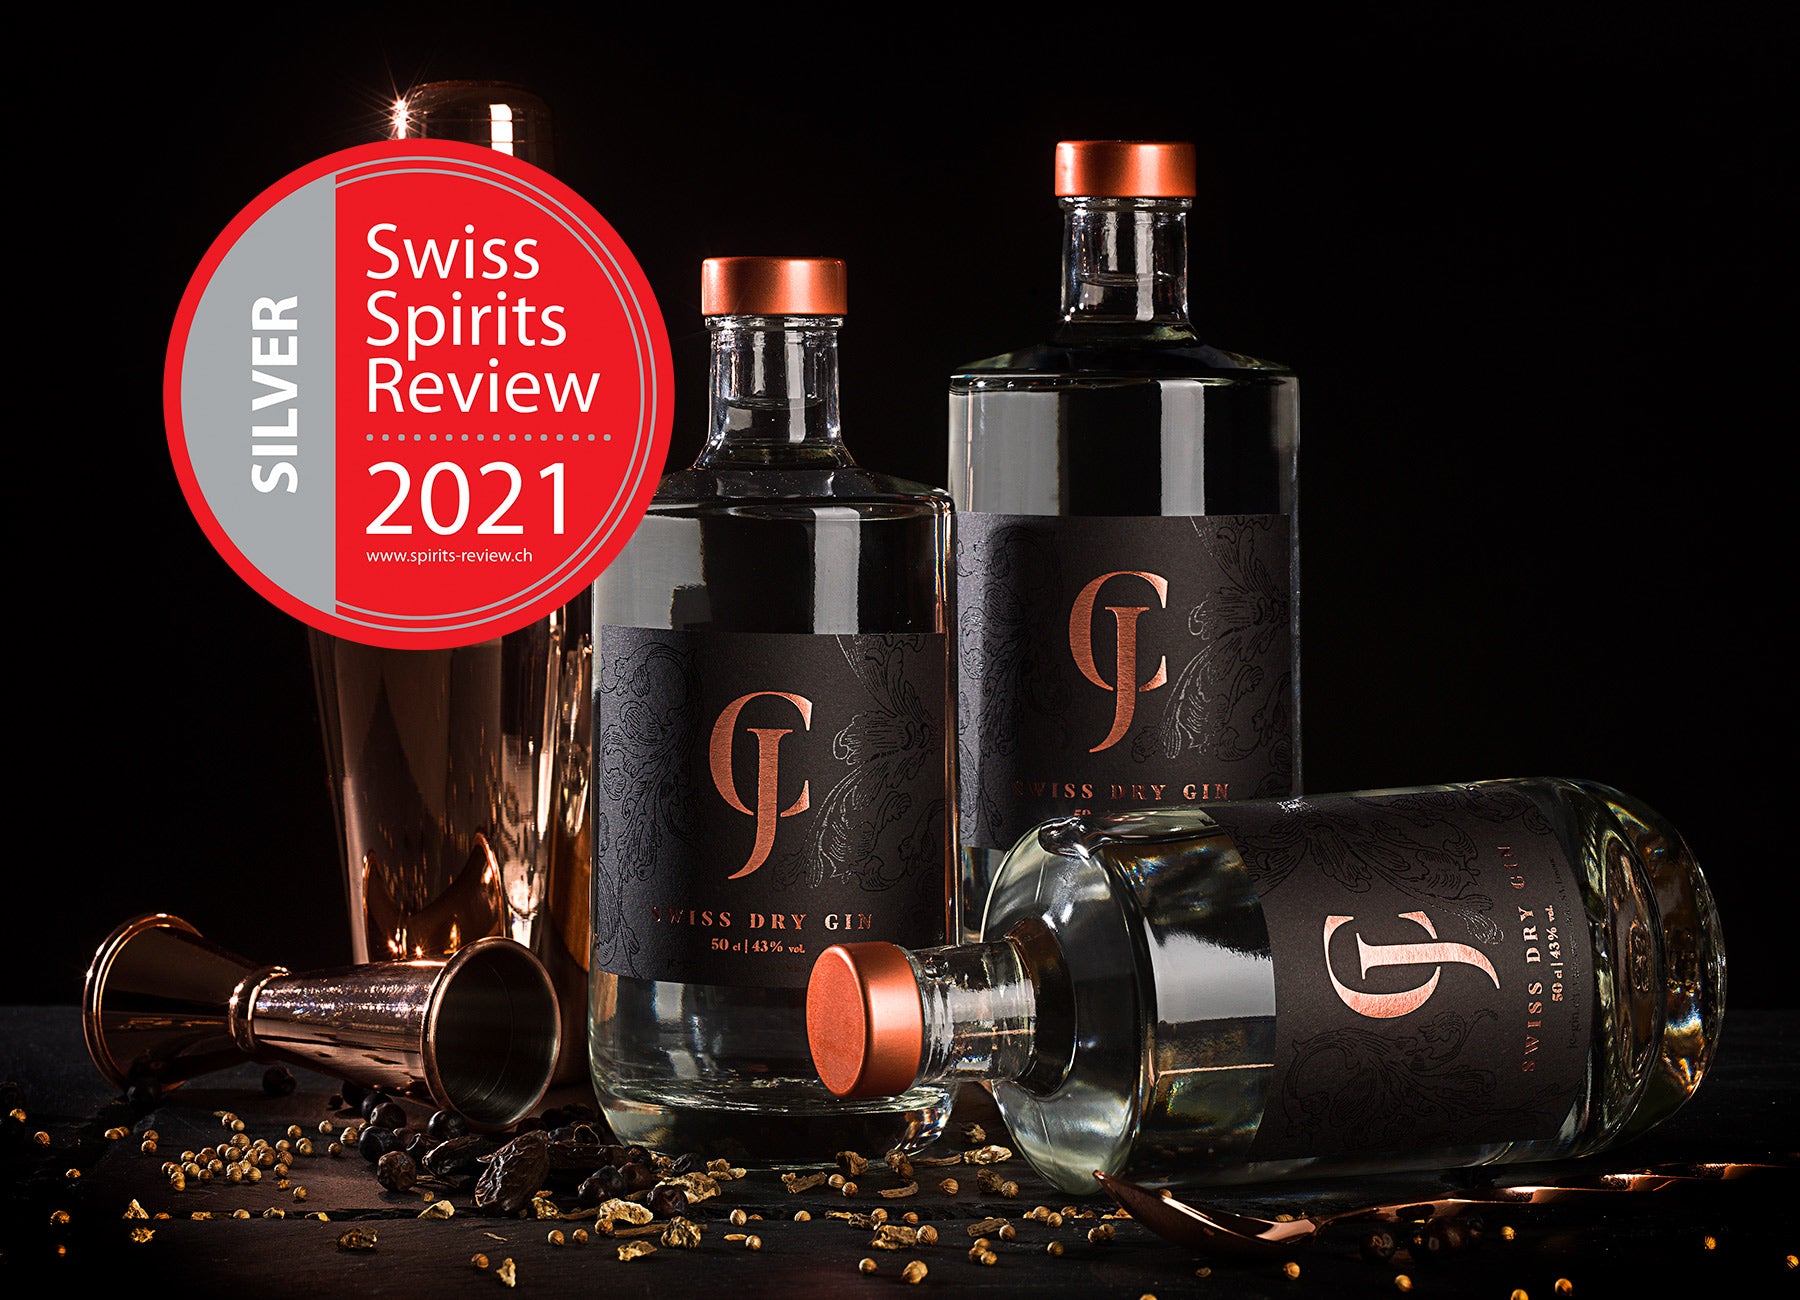 Swiss Spirits Review 2021